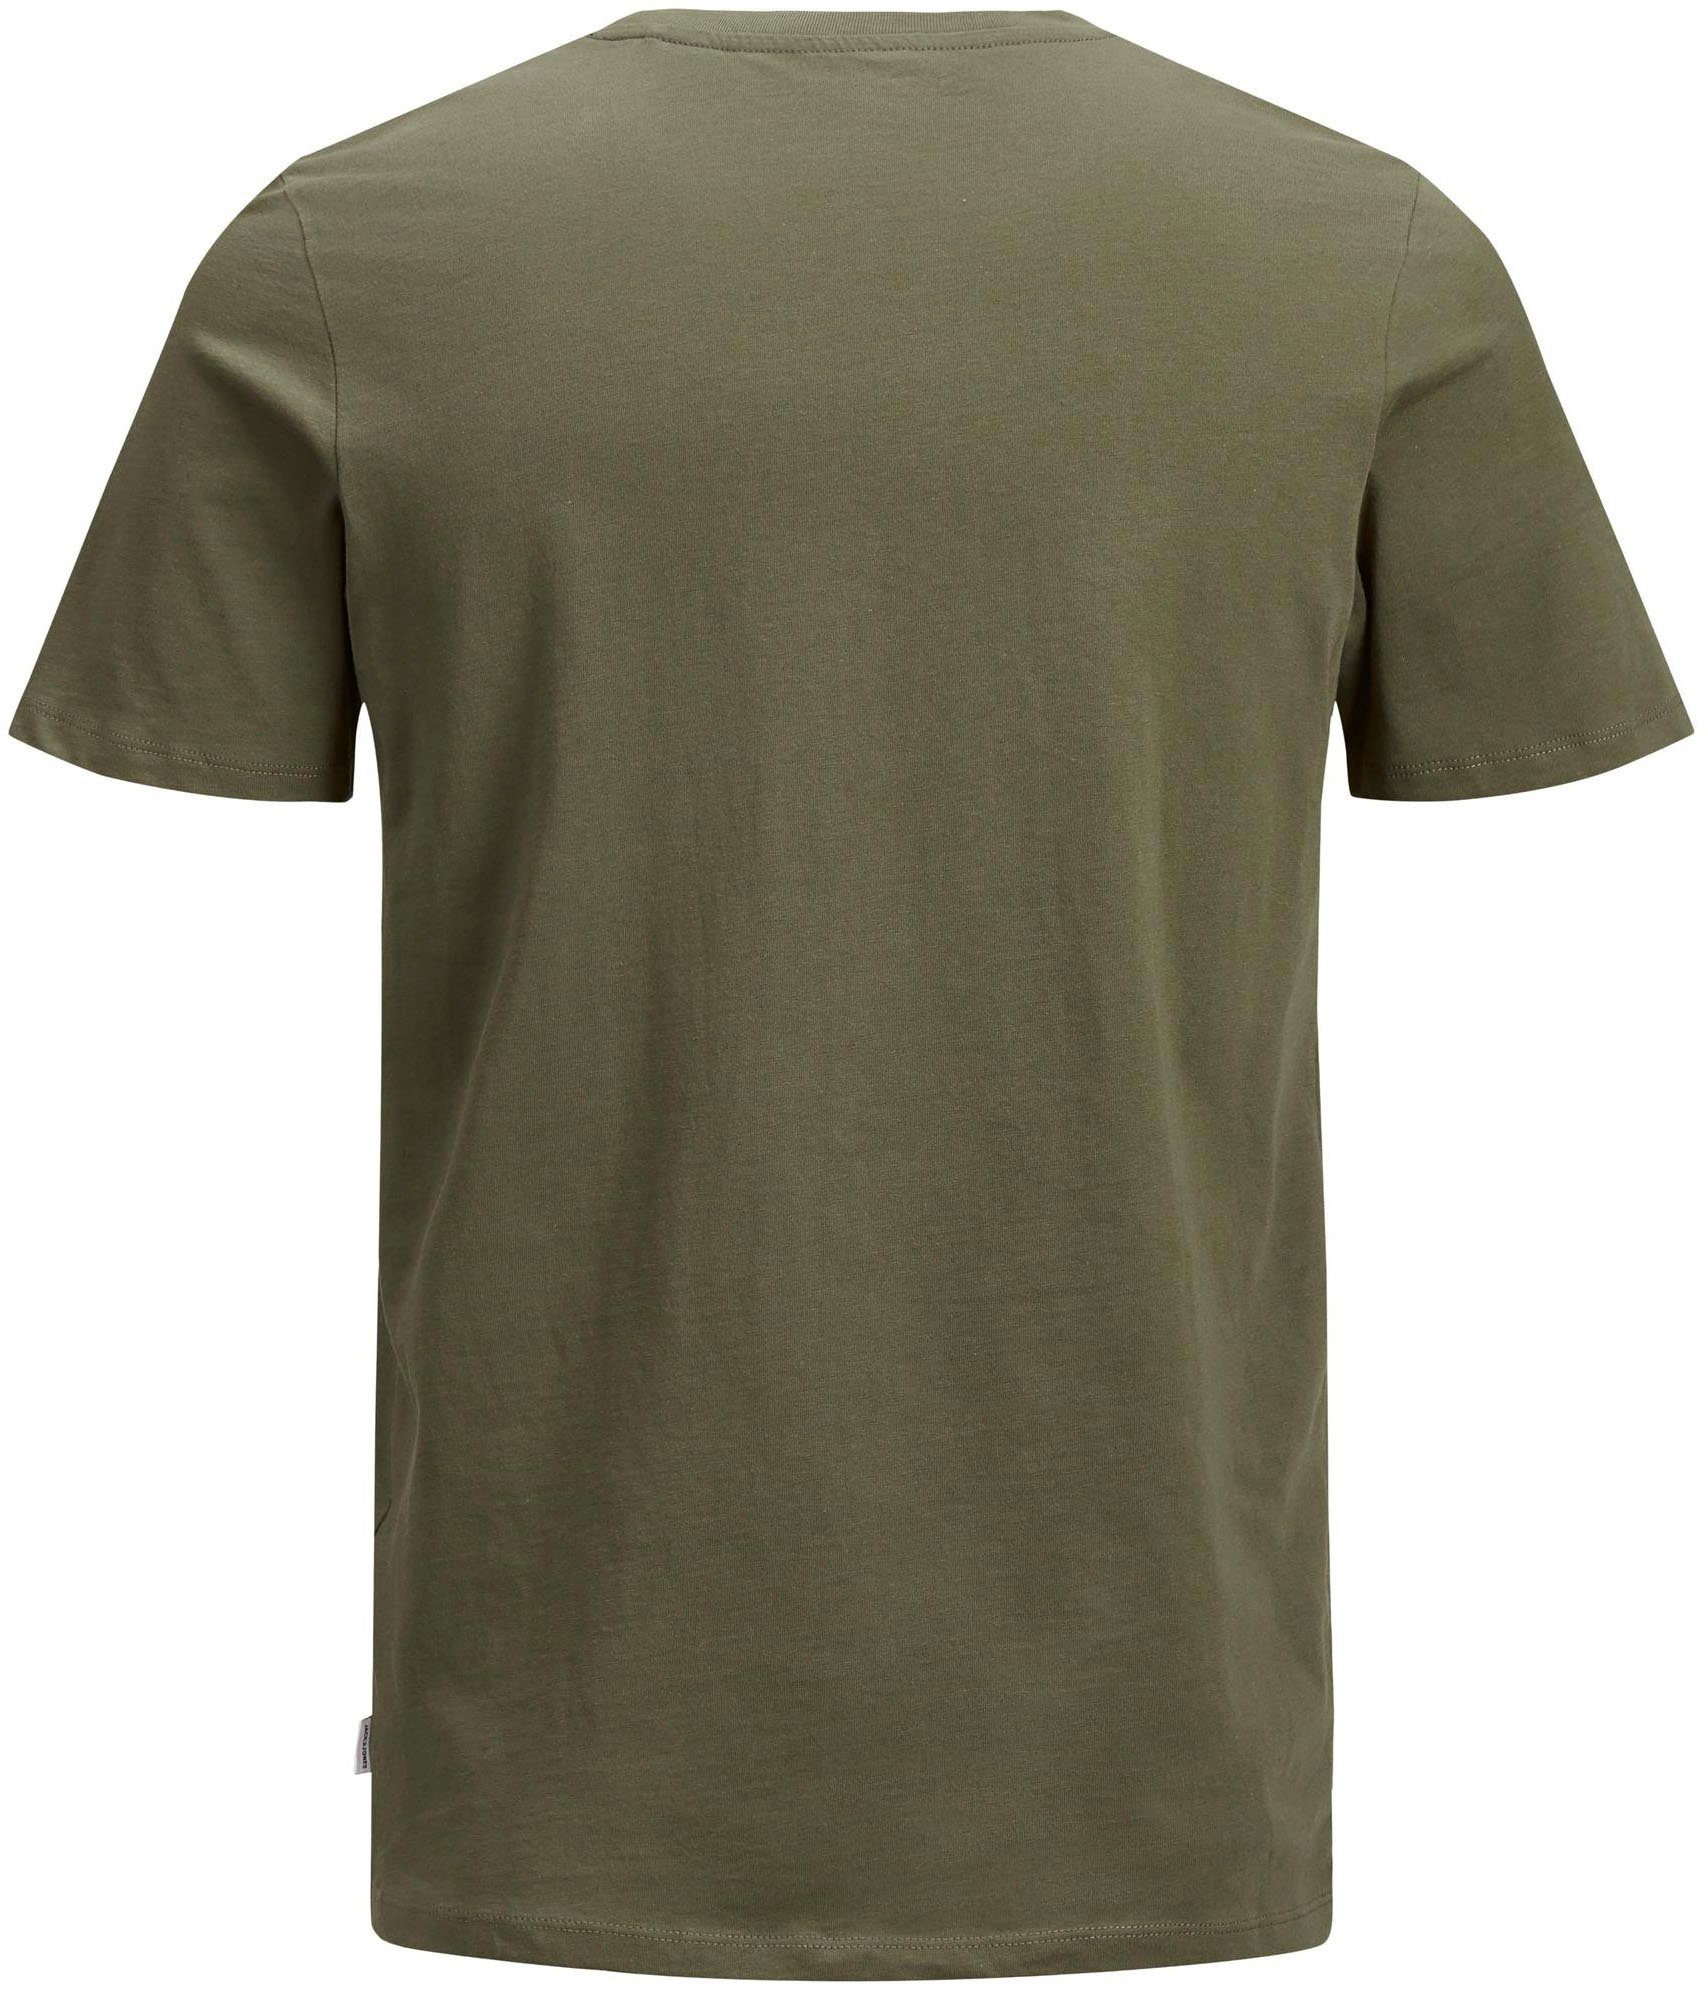 Jack & Jones BASIC T-Shirt ORGANIC TEE olivgrün